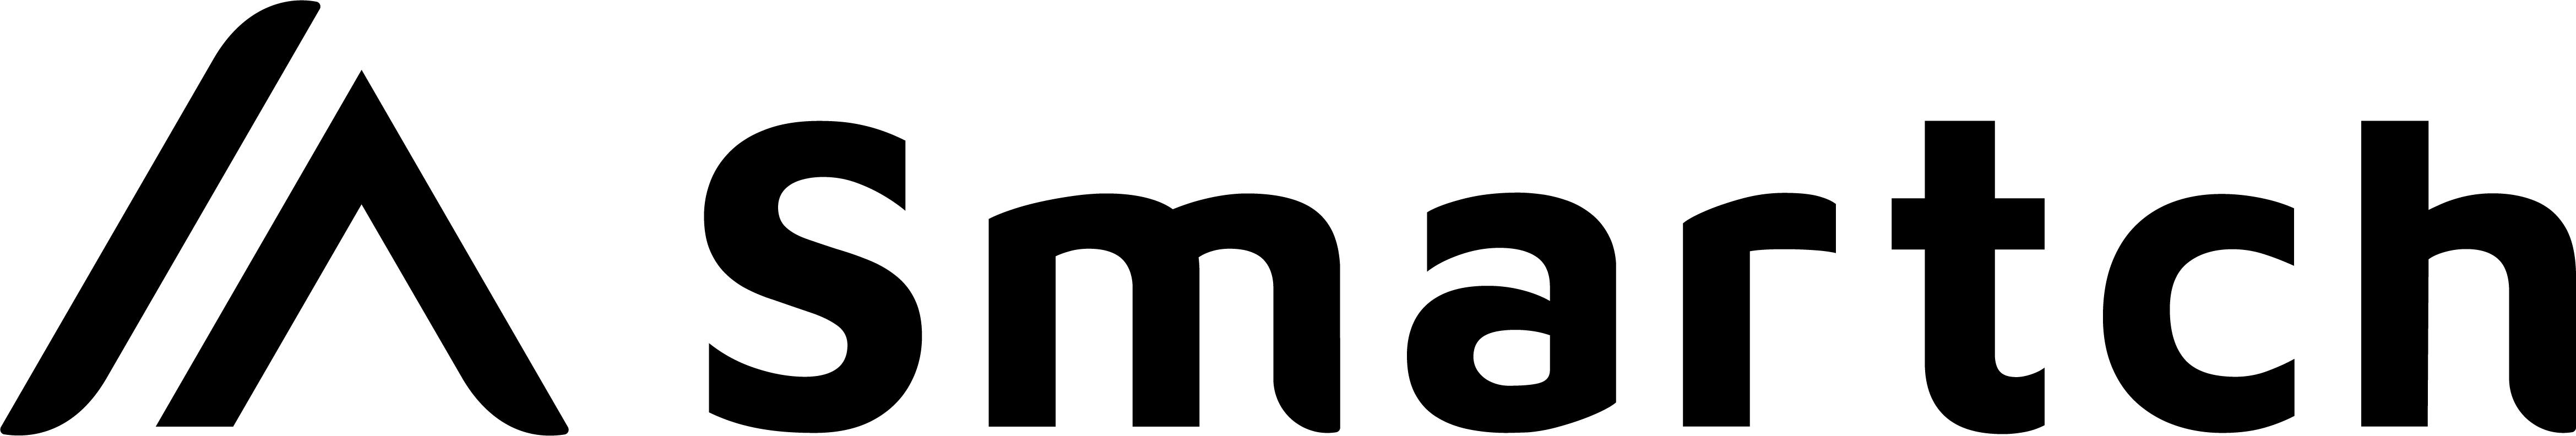 logo-long-noir_3x-1